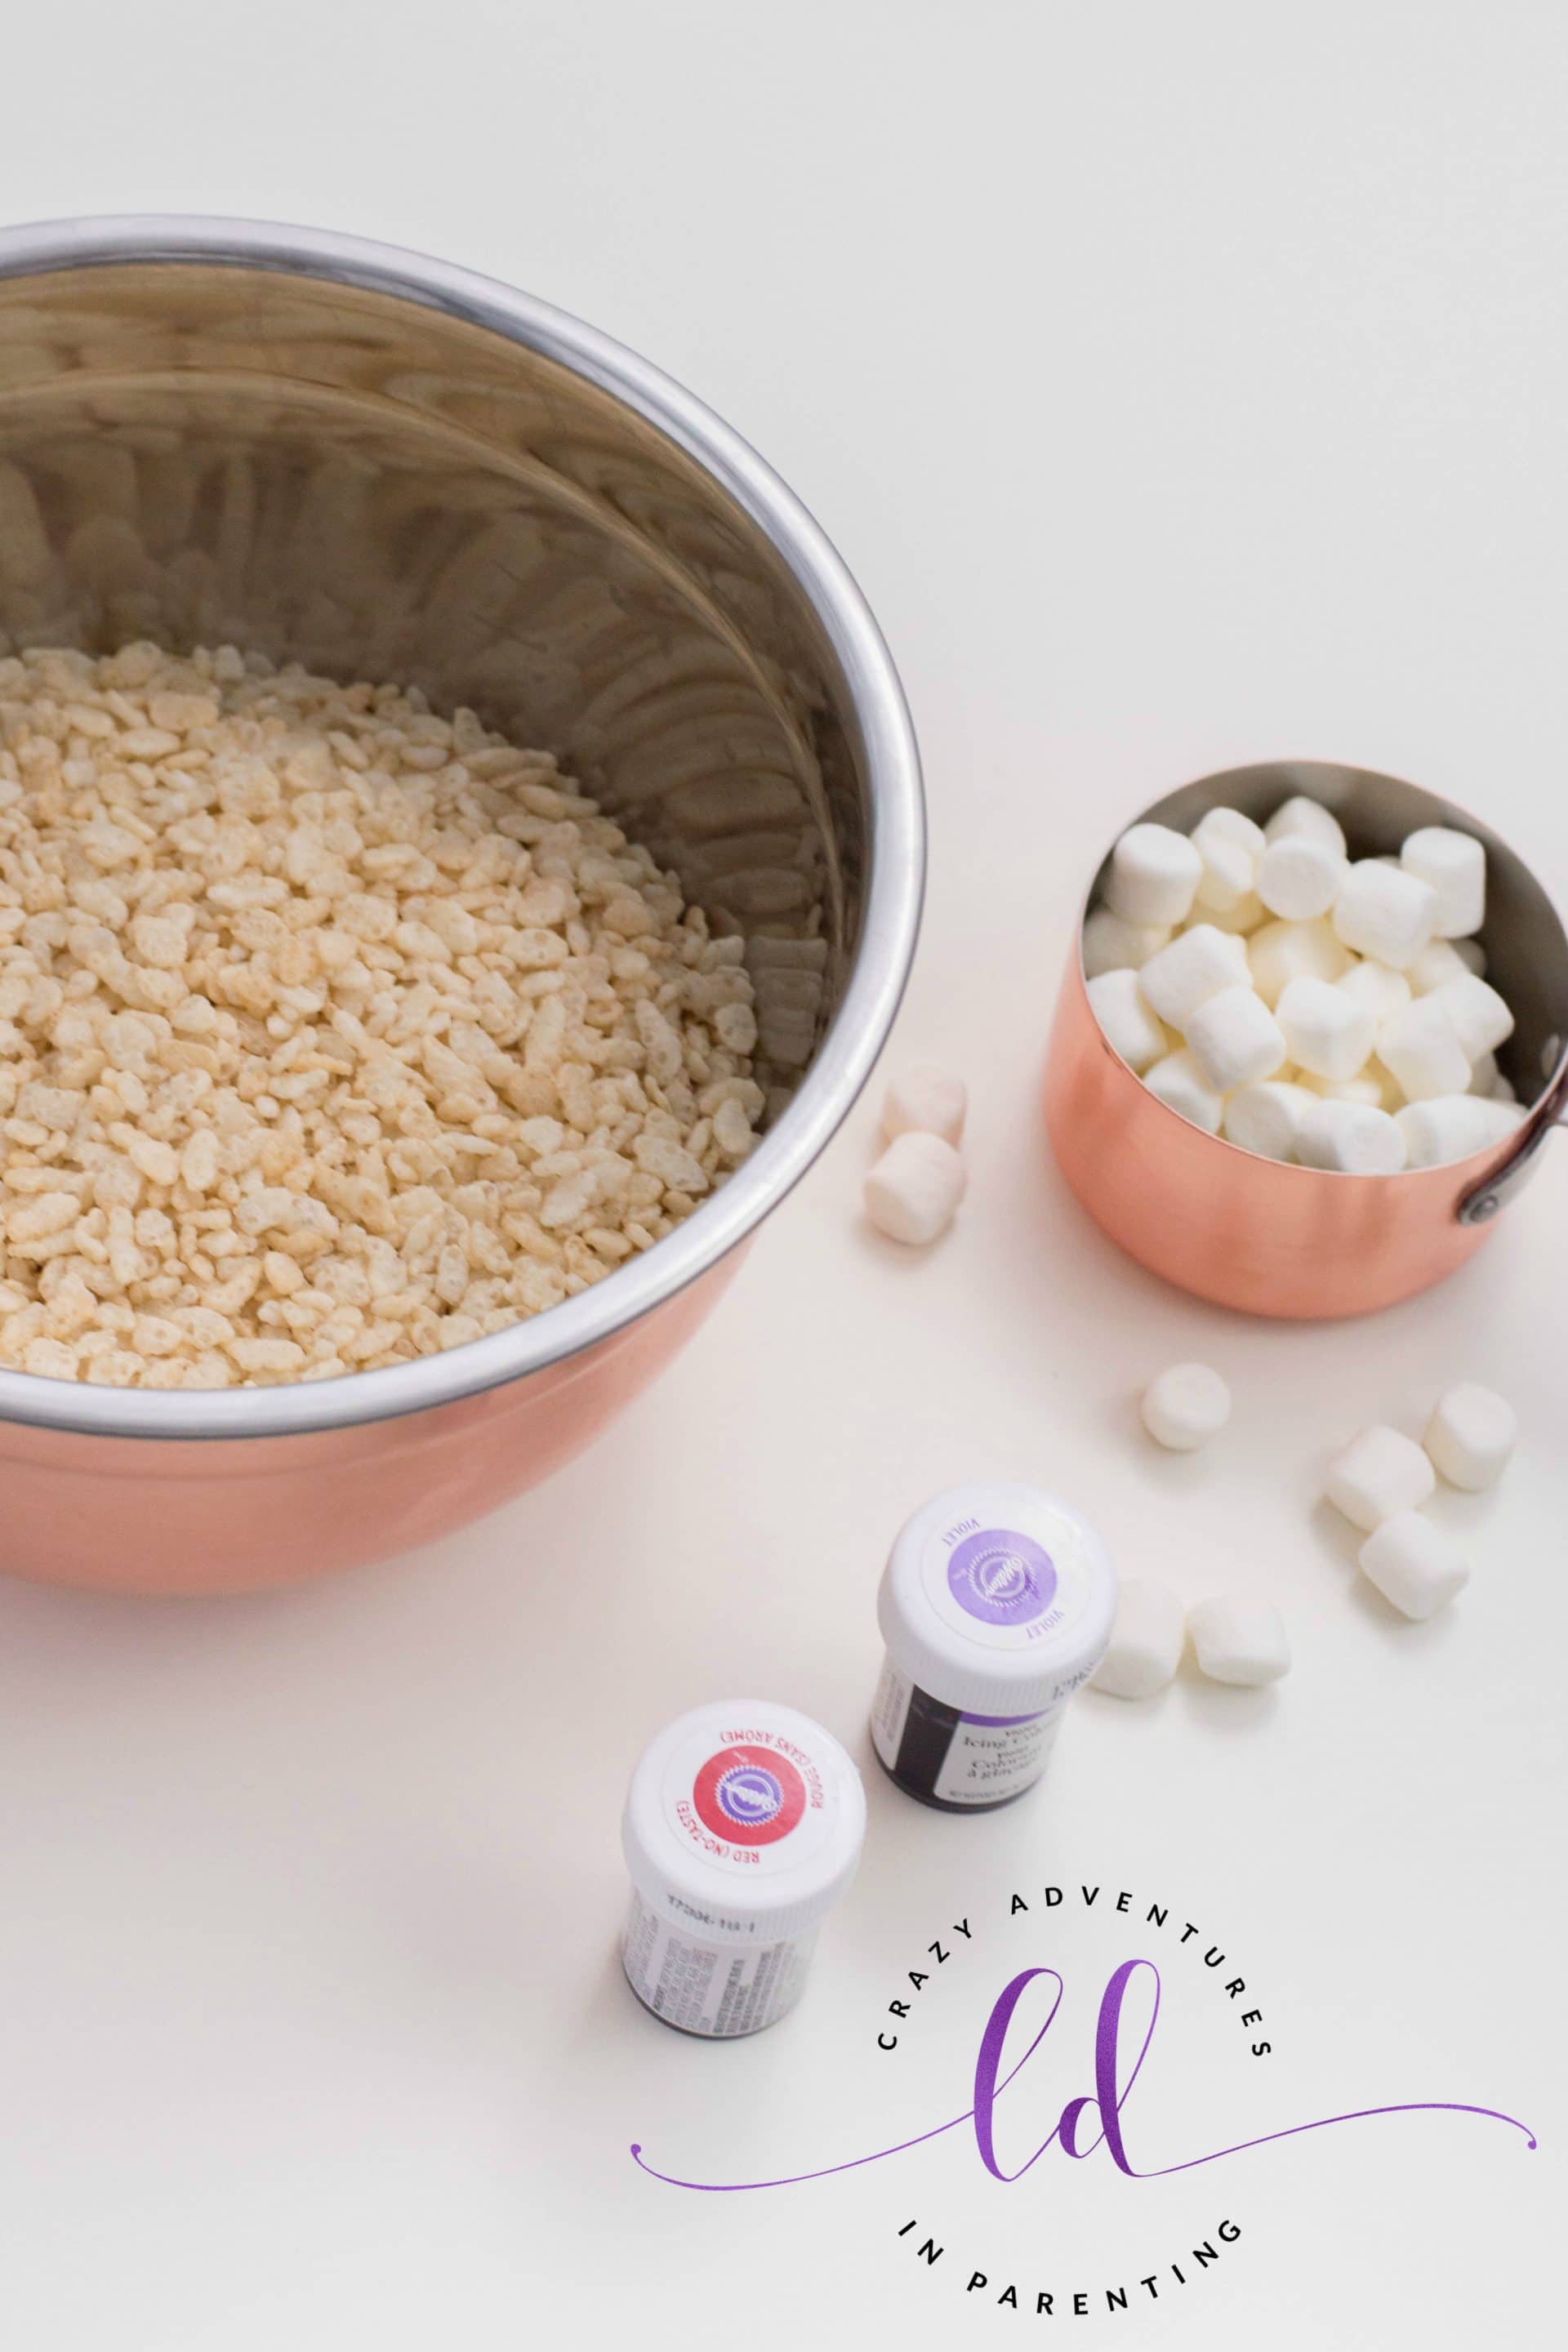 Ingredients Needed to Make Valentine's Rice Krispies Treats